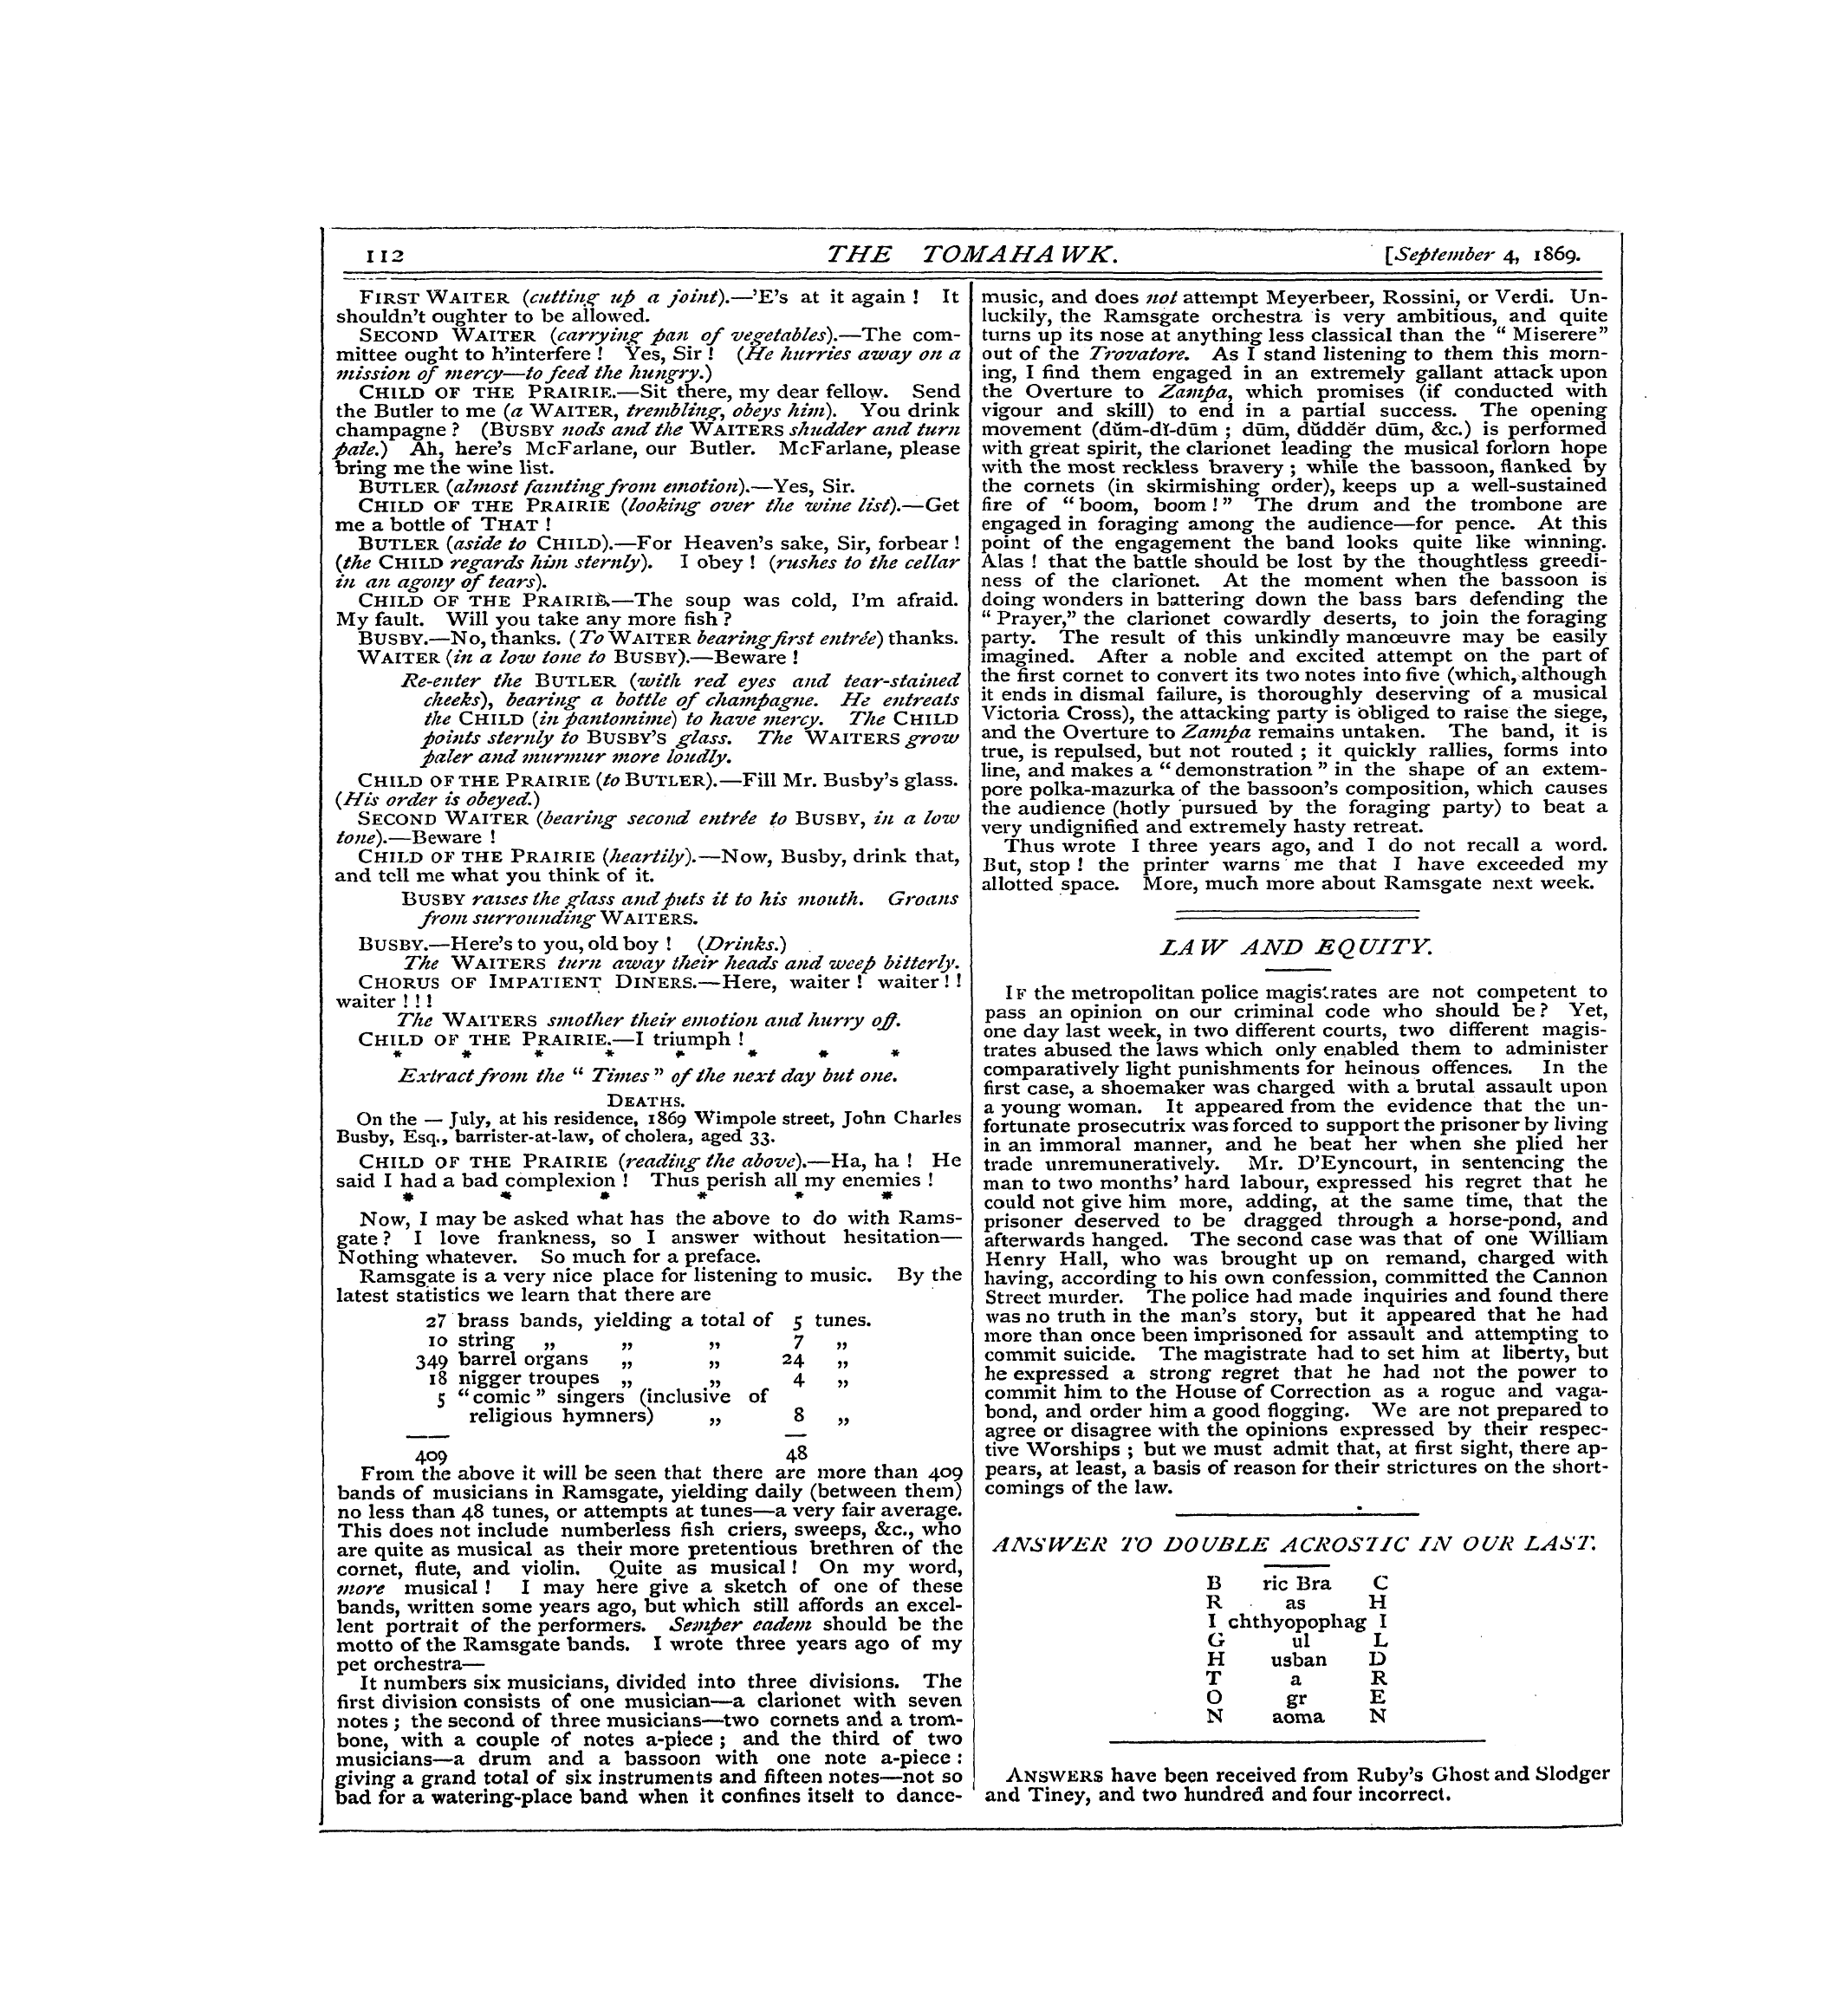 Tomahawk (1867-1870): jS F Y, 1st edition: 14